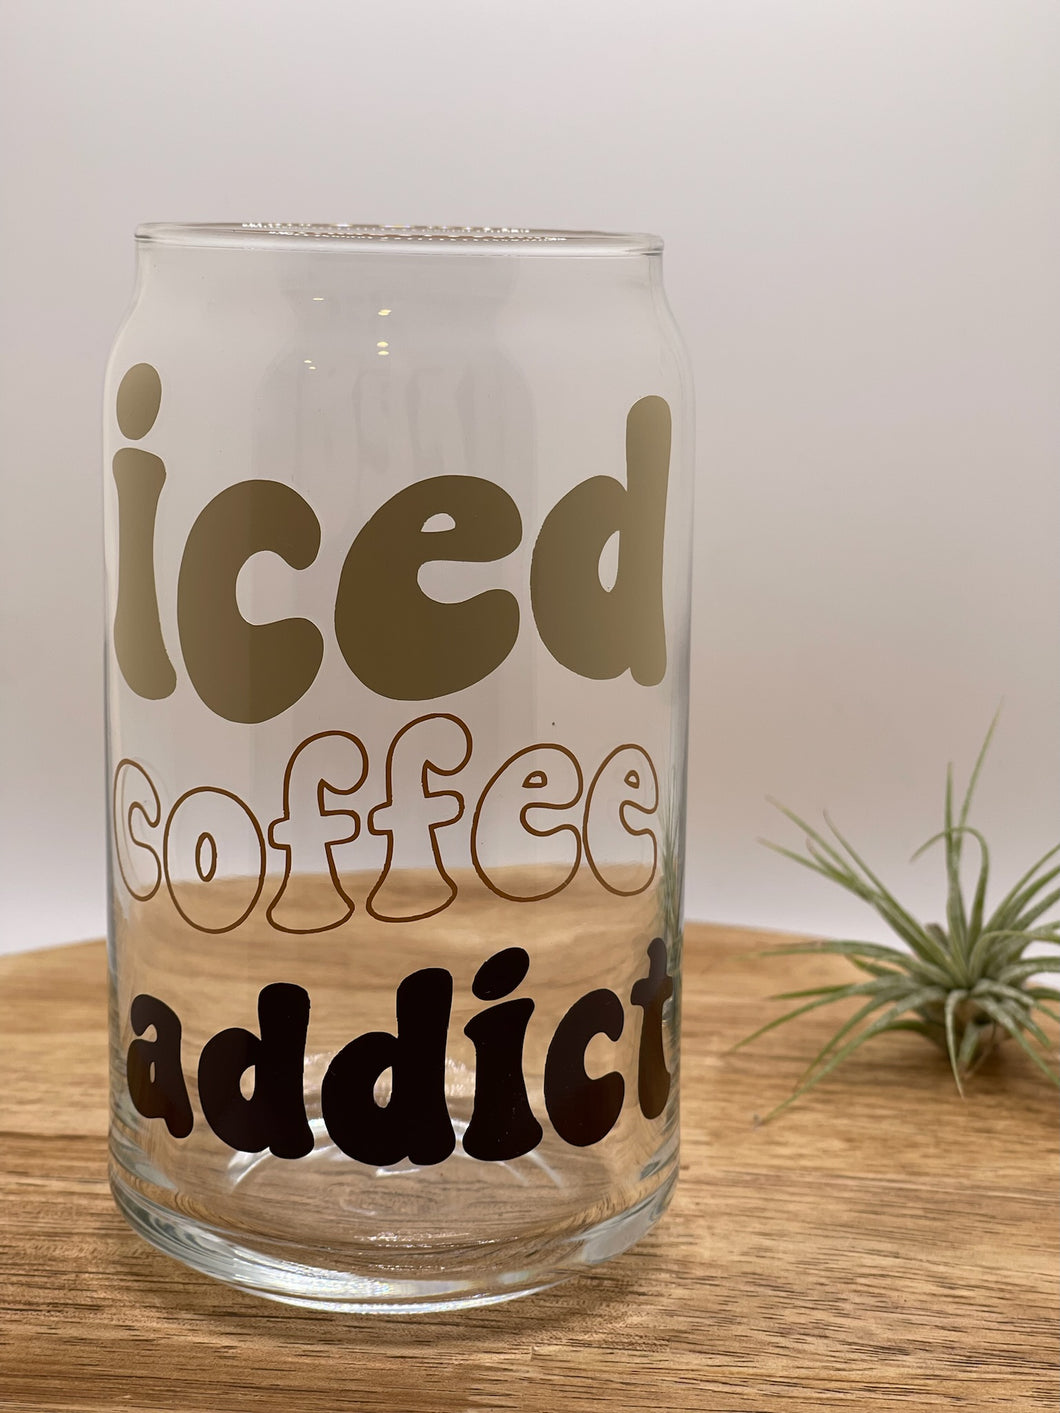 Iced Coffee Addict Cup